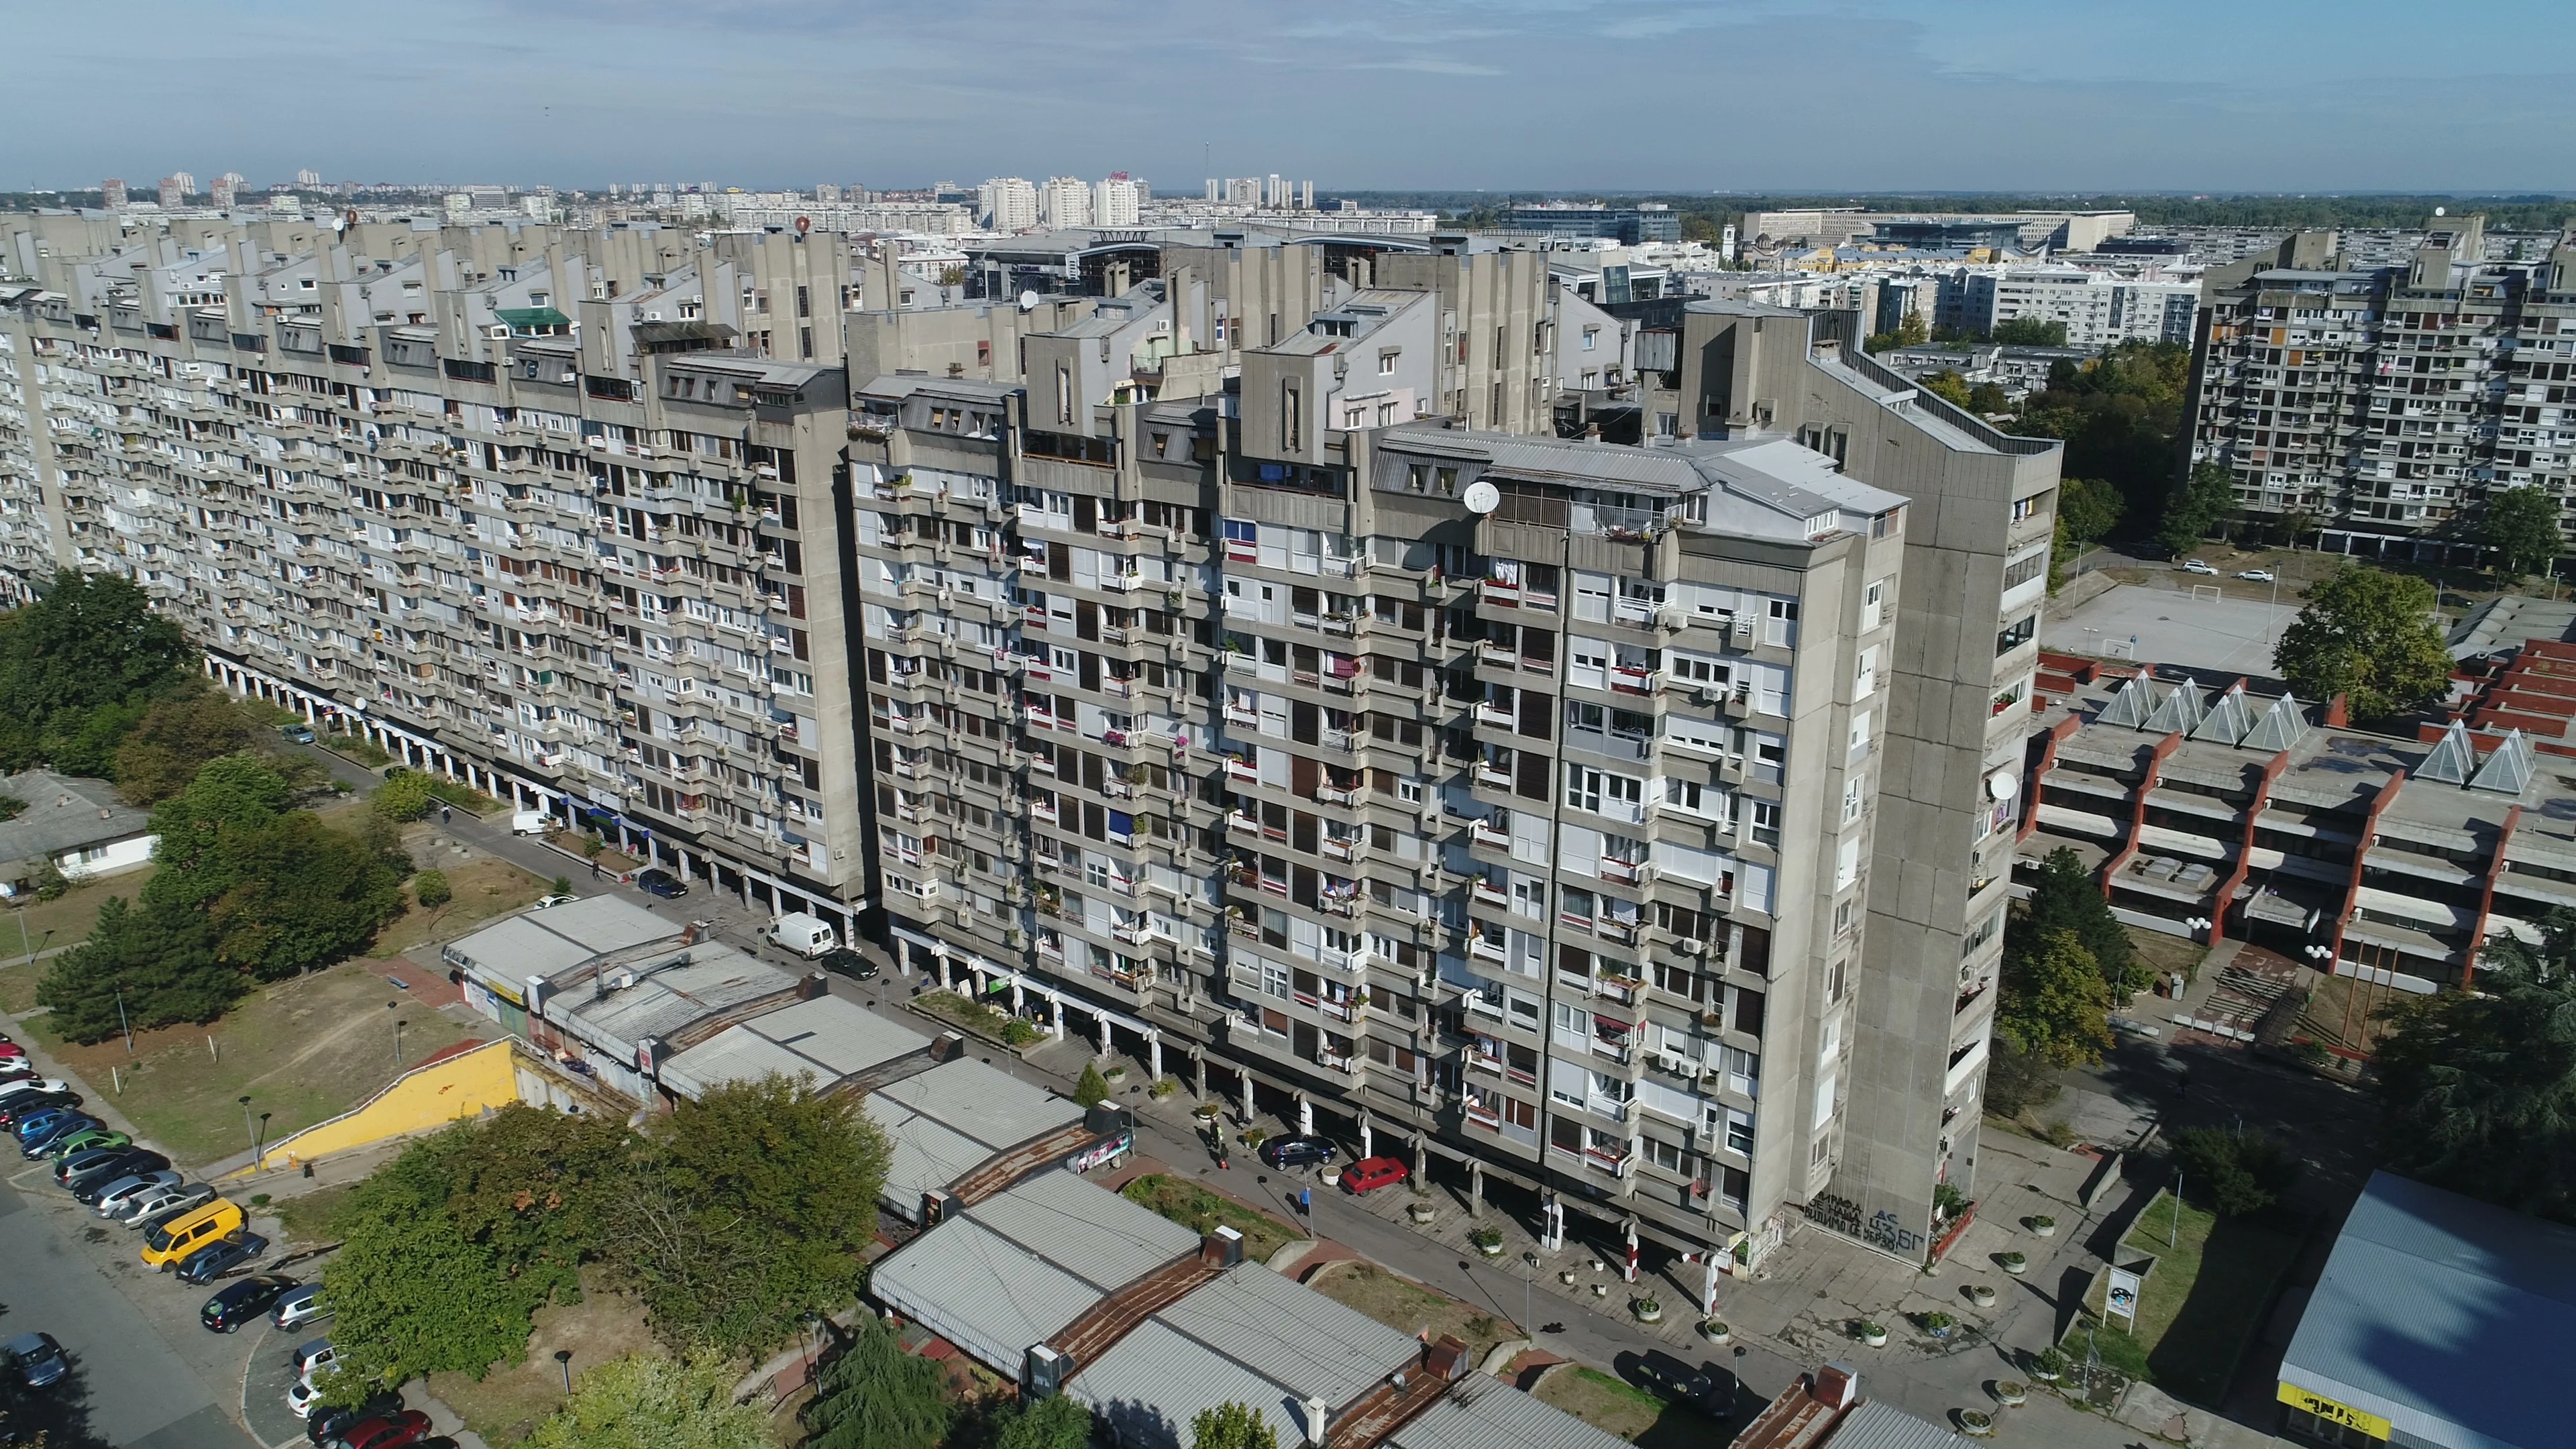 https://images.pond5.com/communist-era-concrete-blocks-residential-footage-085451838_prevstill.jpeg